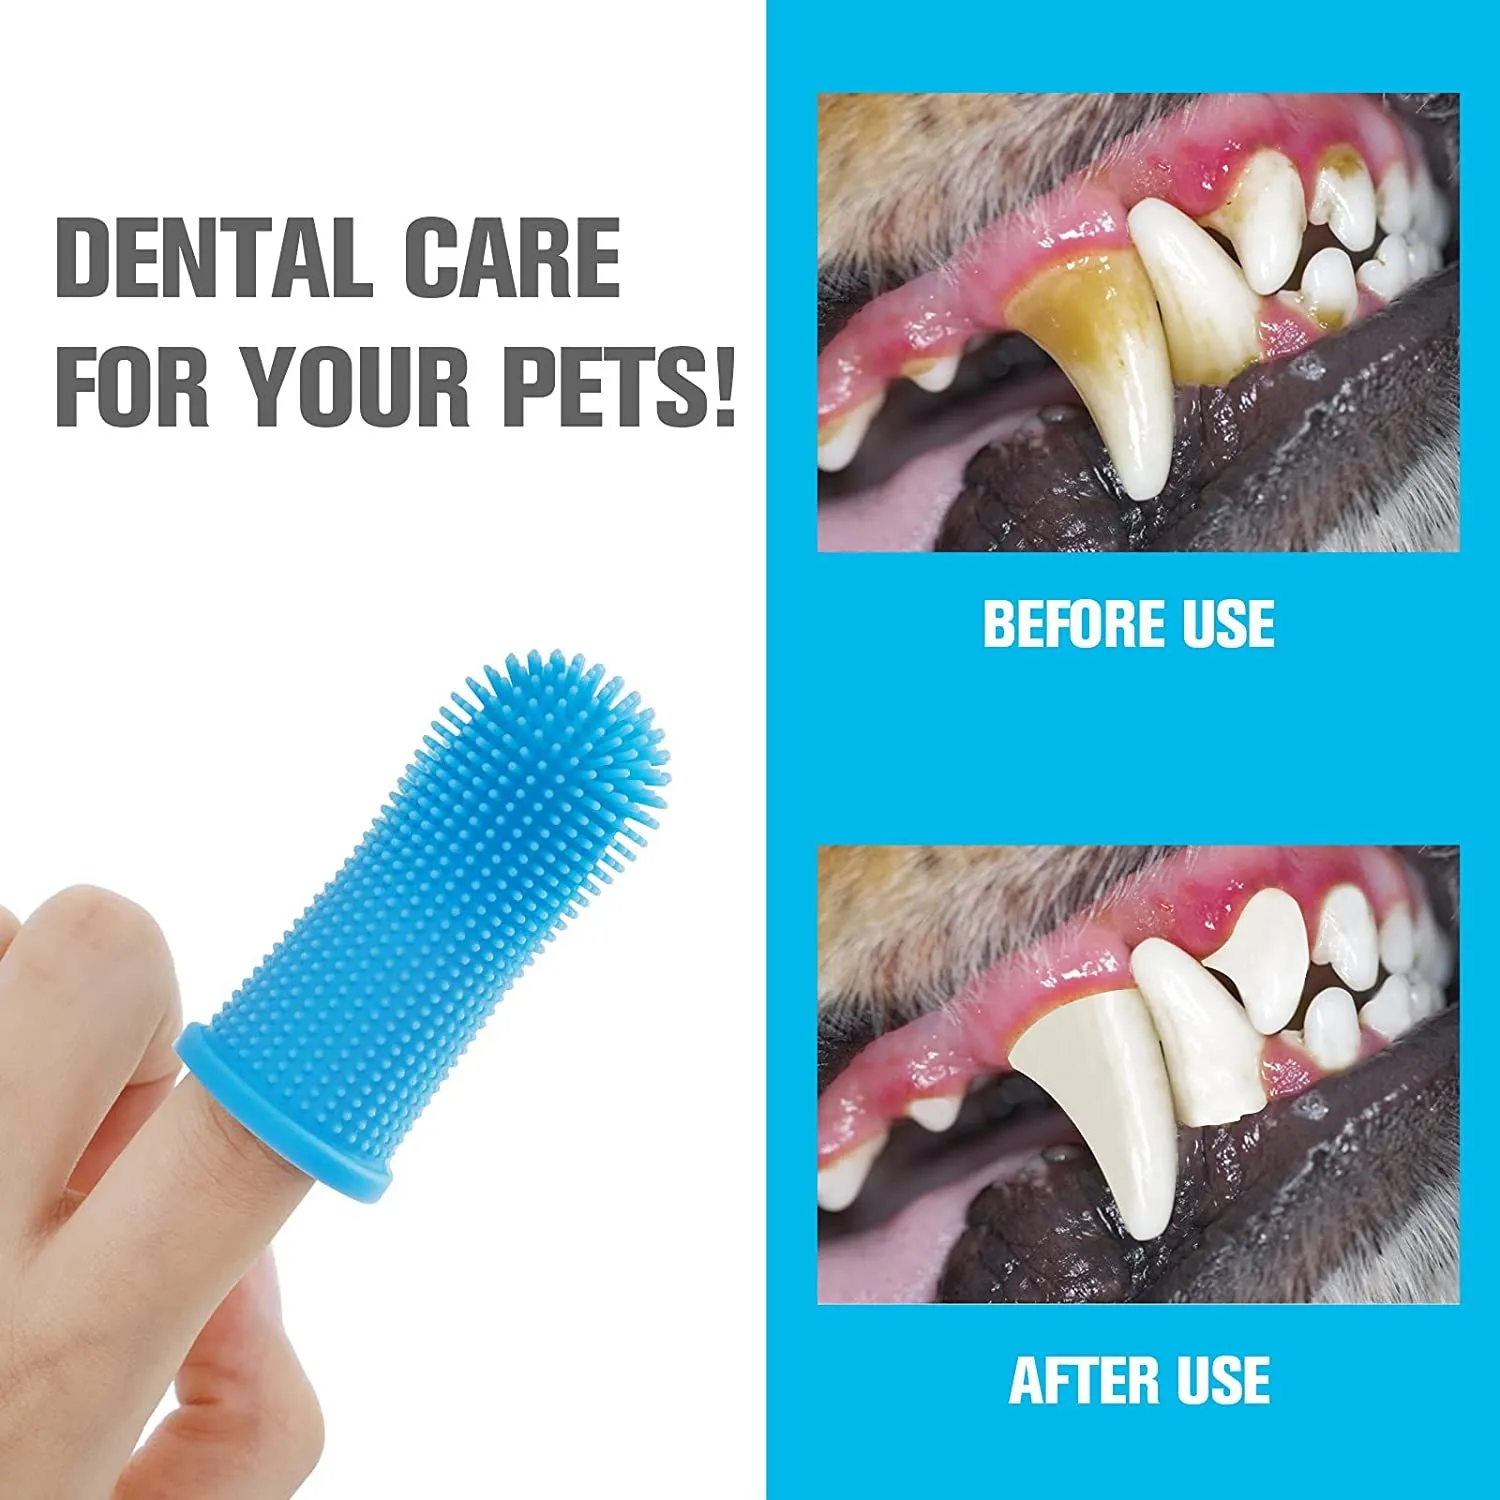 CAT ELGROMING SUPER MOLO MOLO PET PET PET dentes de dentes de dentes Limpando Bad Breath Care